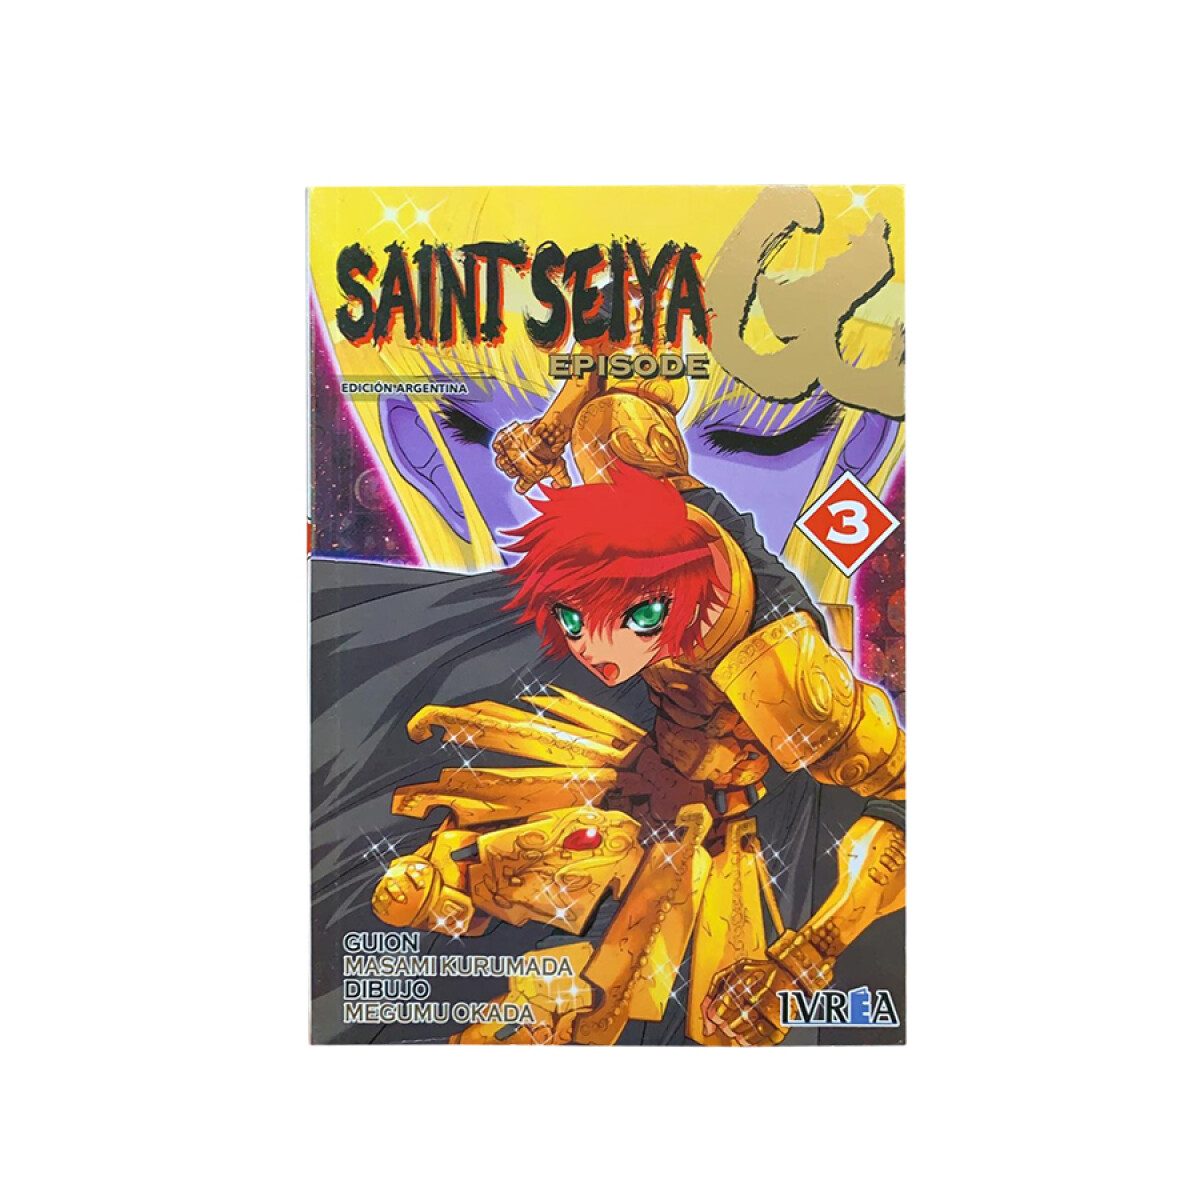 Saint Seiya Episode G Vol 3 